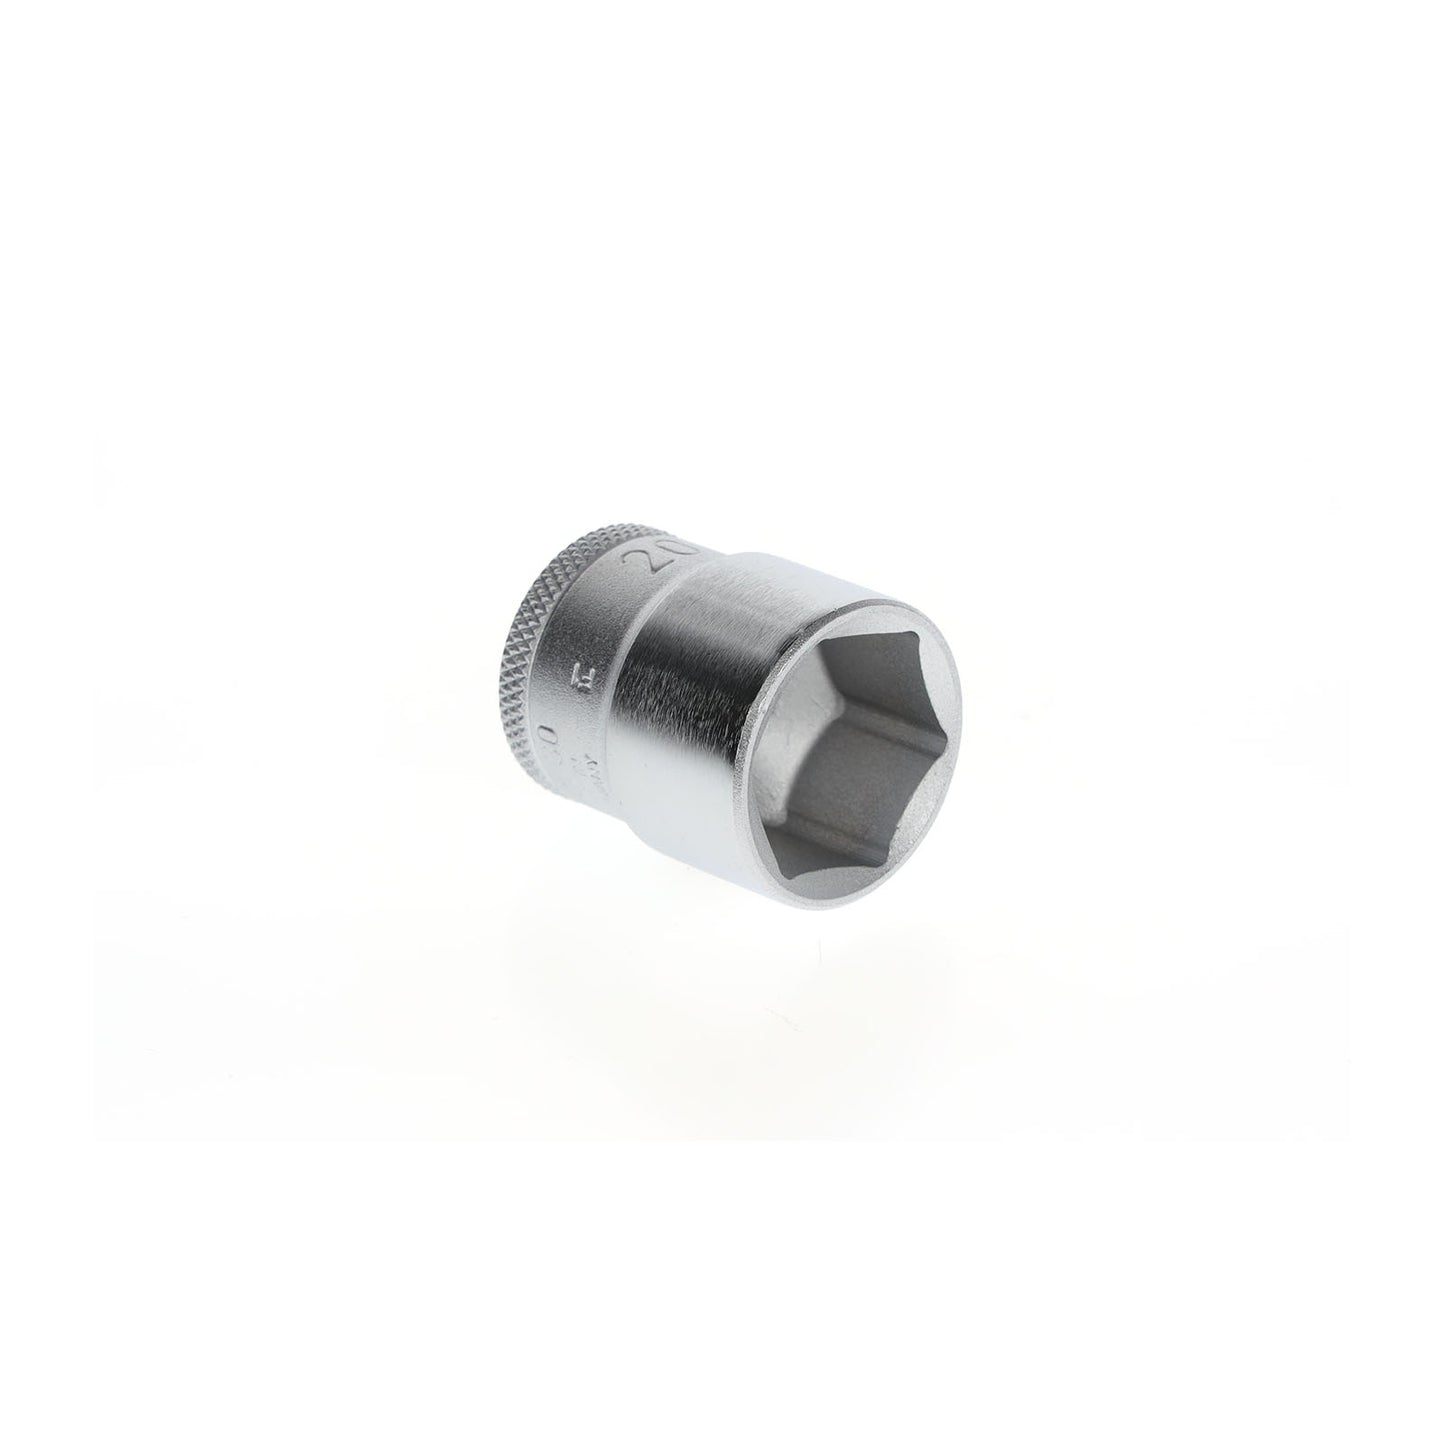 GEDORE 30 20 - Hexagonal socket 3/8", 20 mm (6234820)